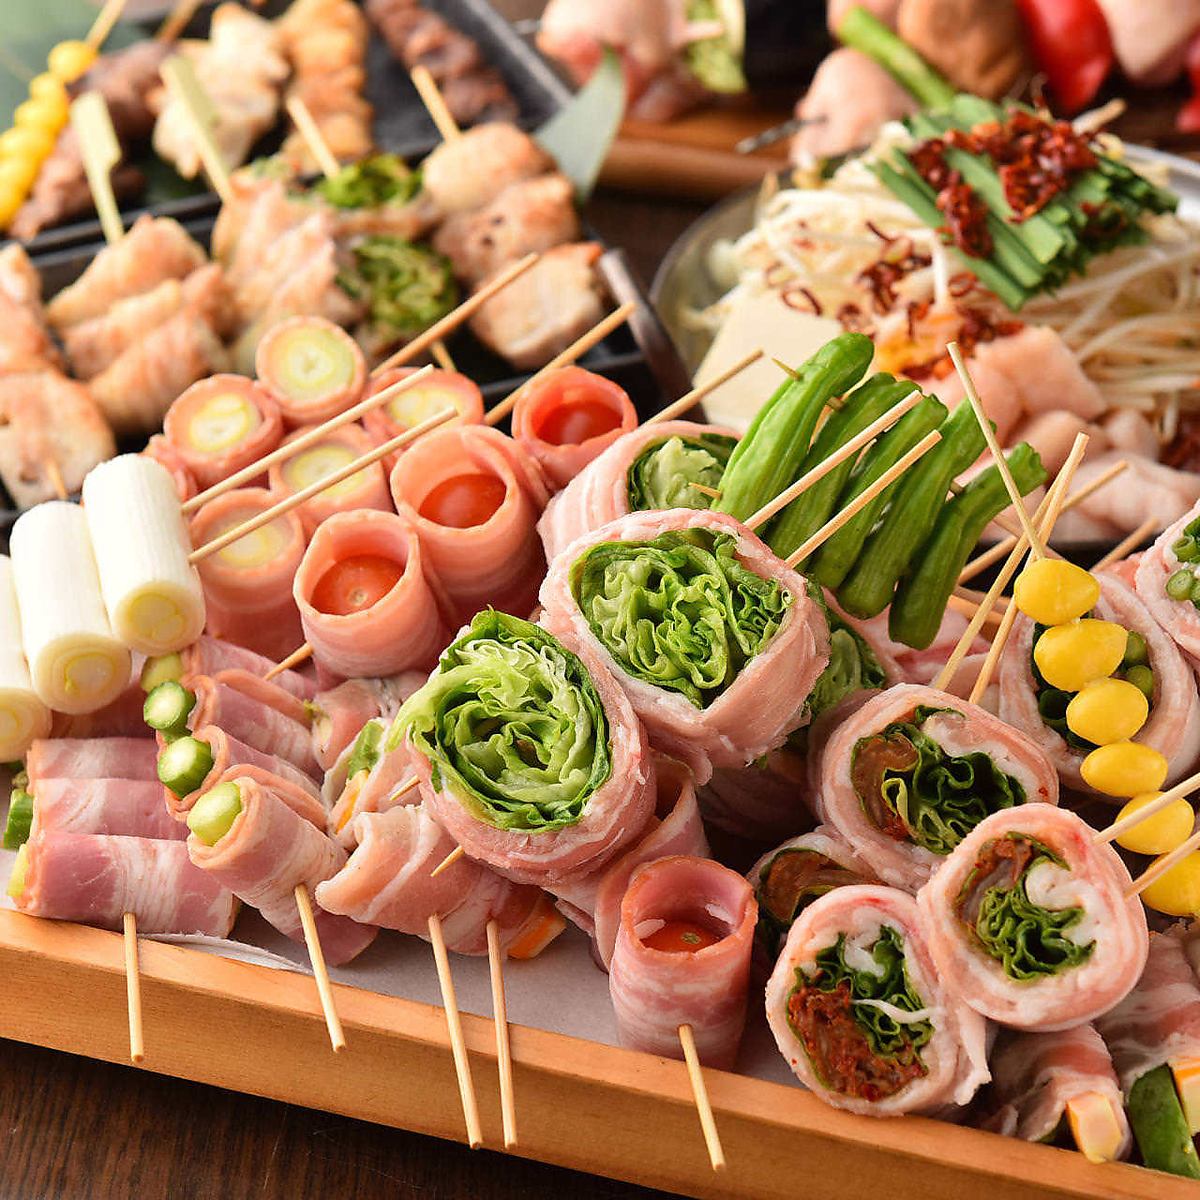 All-you-can-eat selection of yakitori and Hakata kushiyaki made by craftsmen!